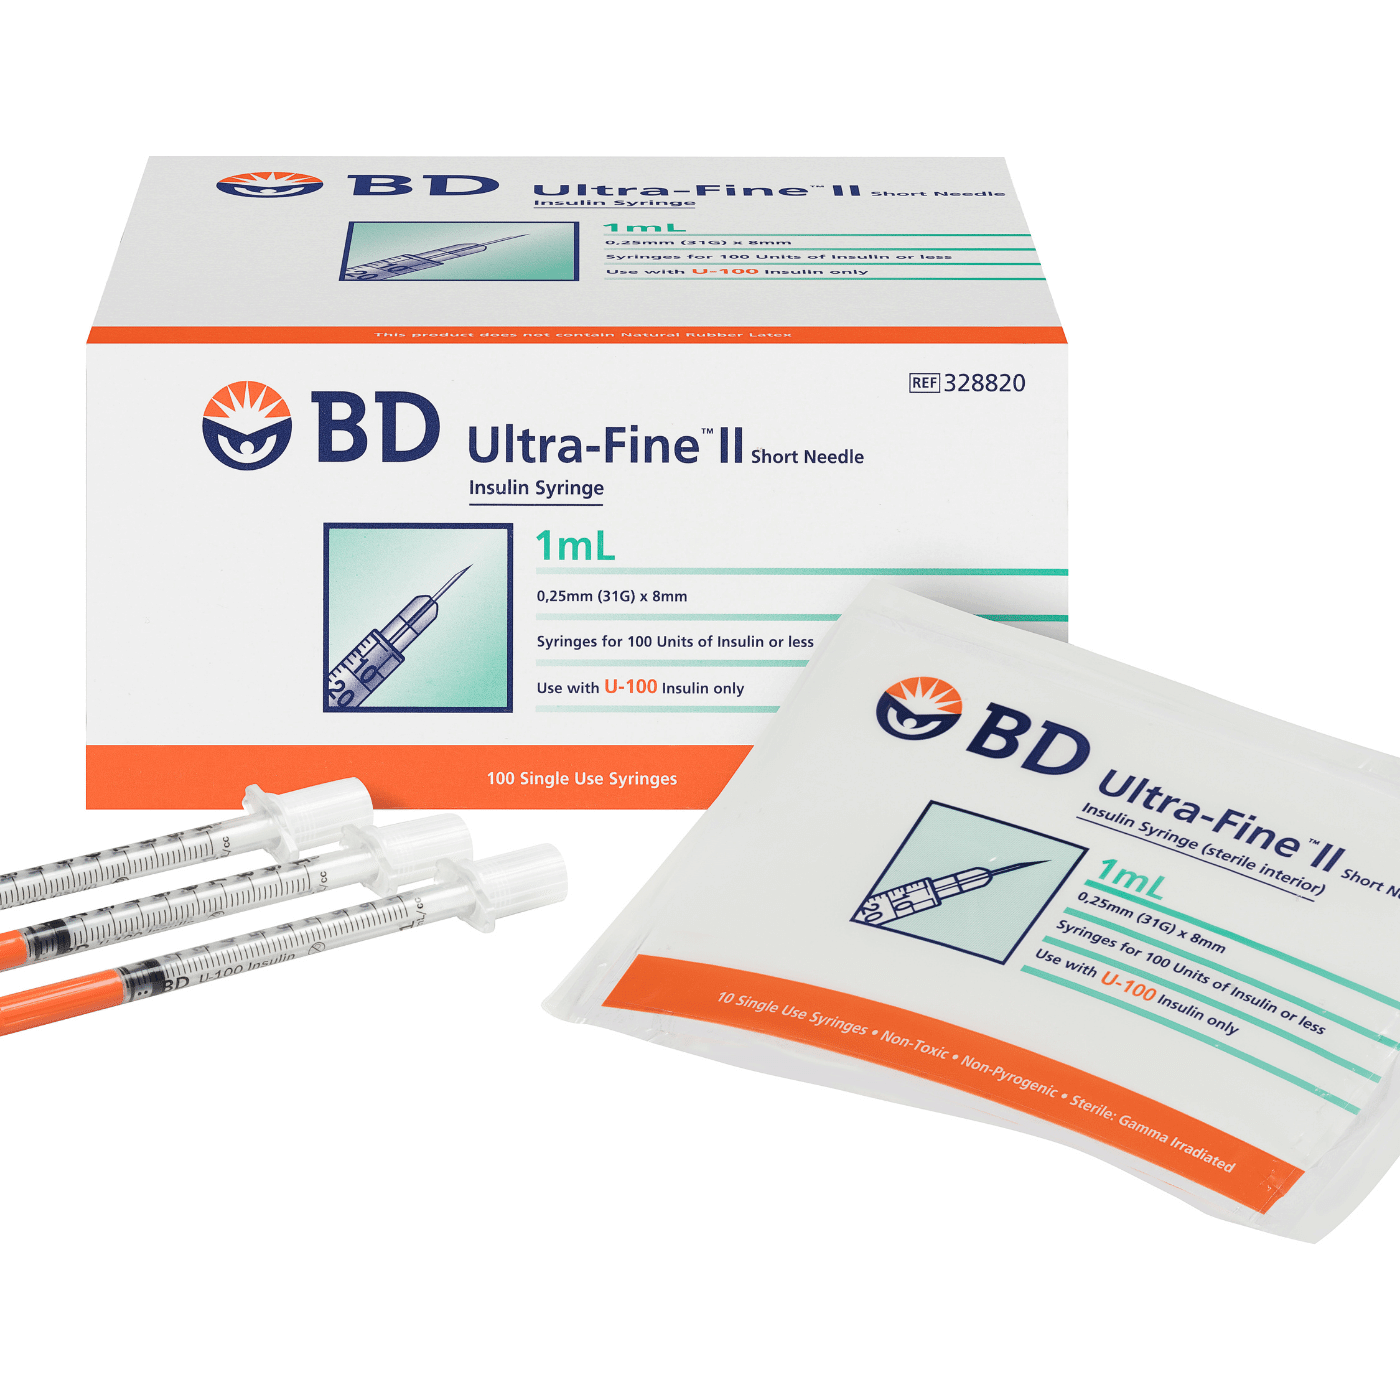 BD Ultra-Fine II Short Needle Insulin Syringes|